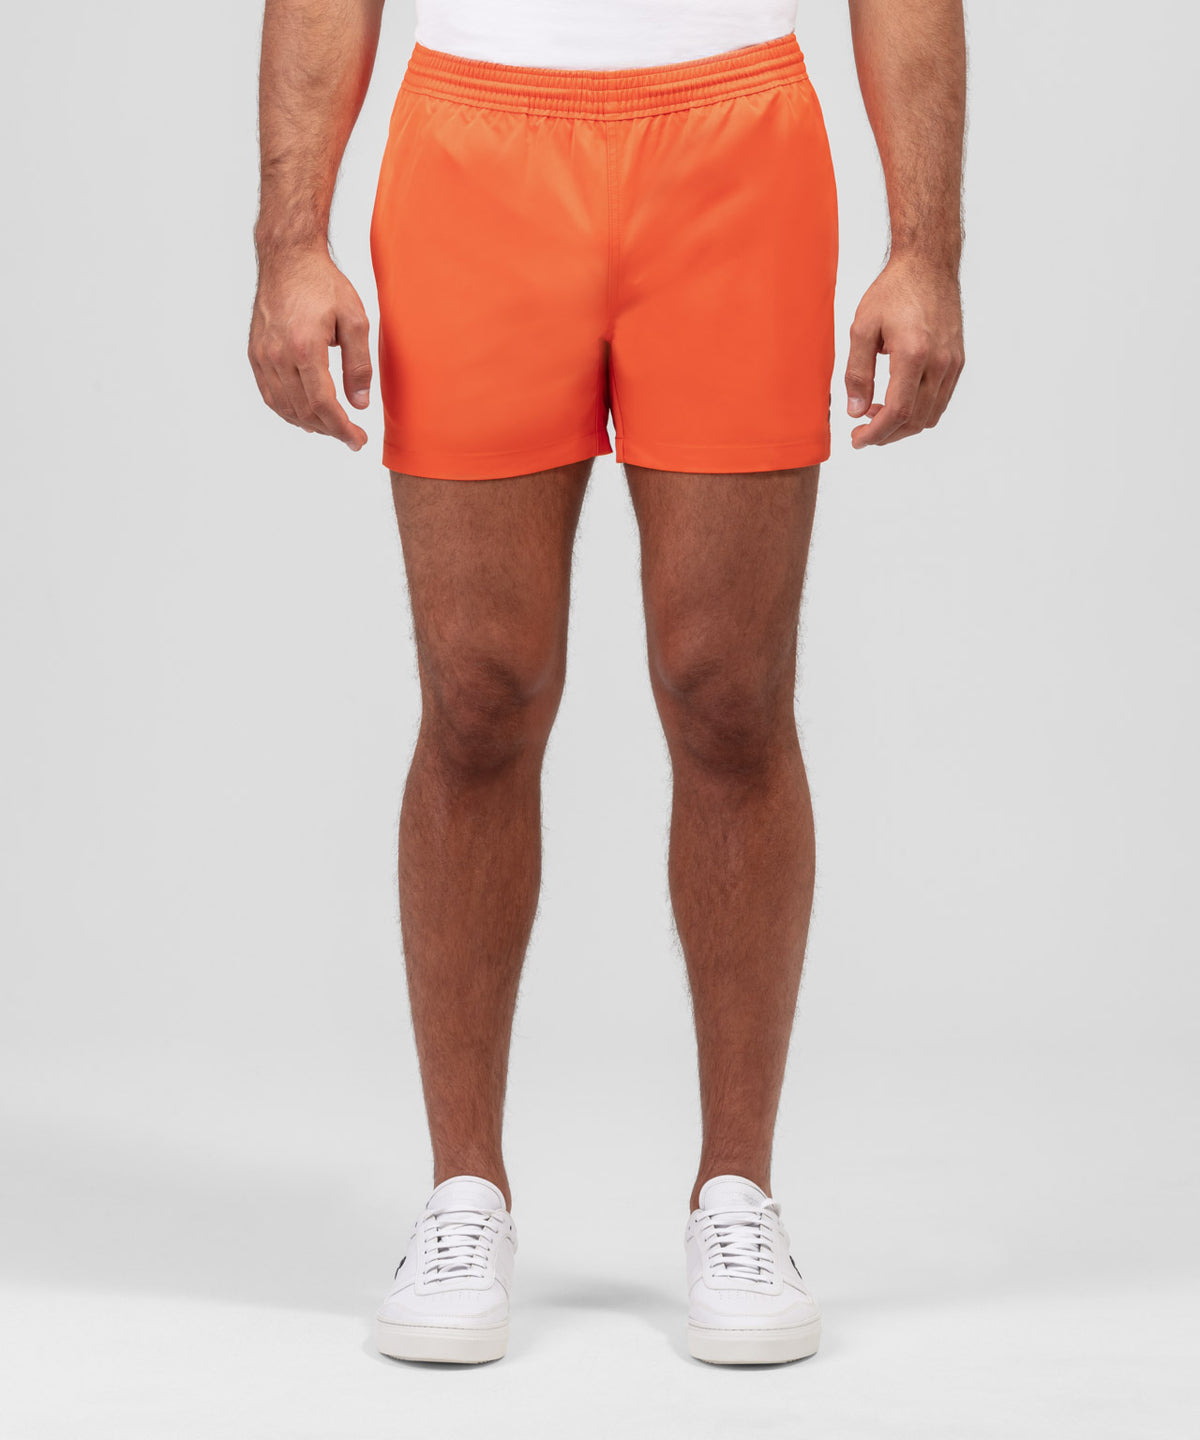 Exerciser Shorts: Spritz Orange